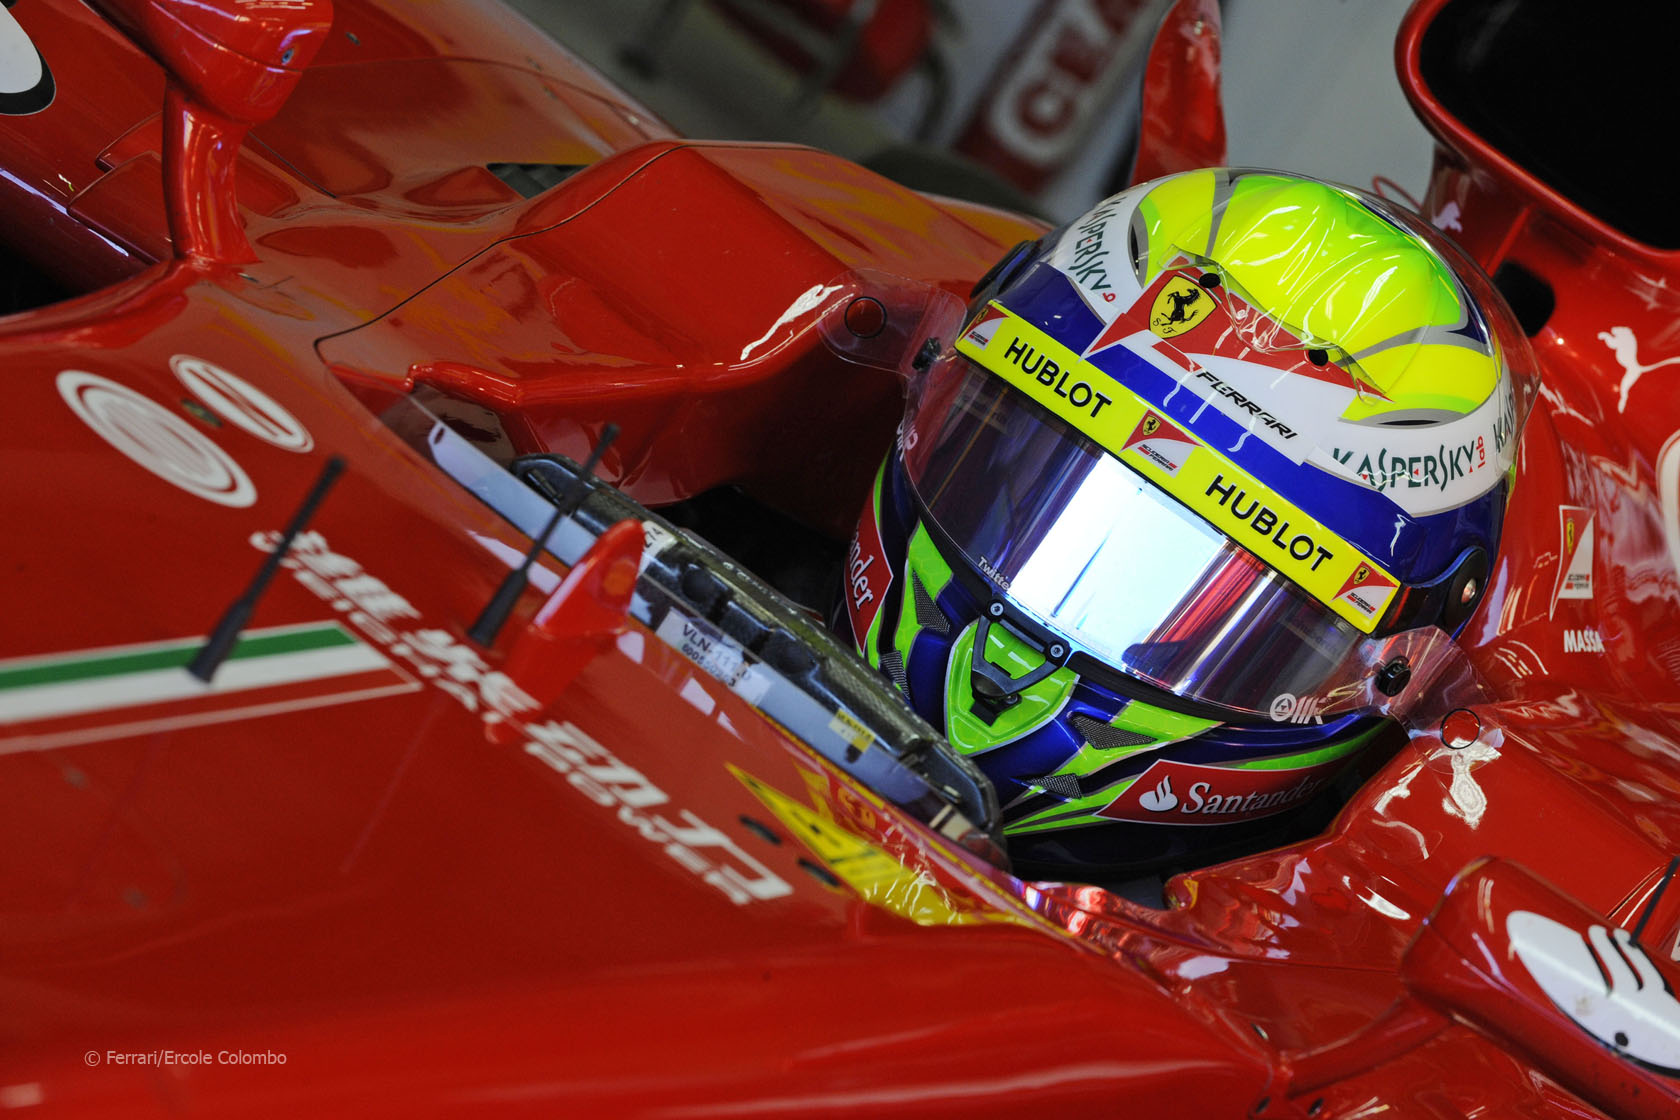 Formula 1 Testing Jerez 2013 Video